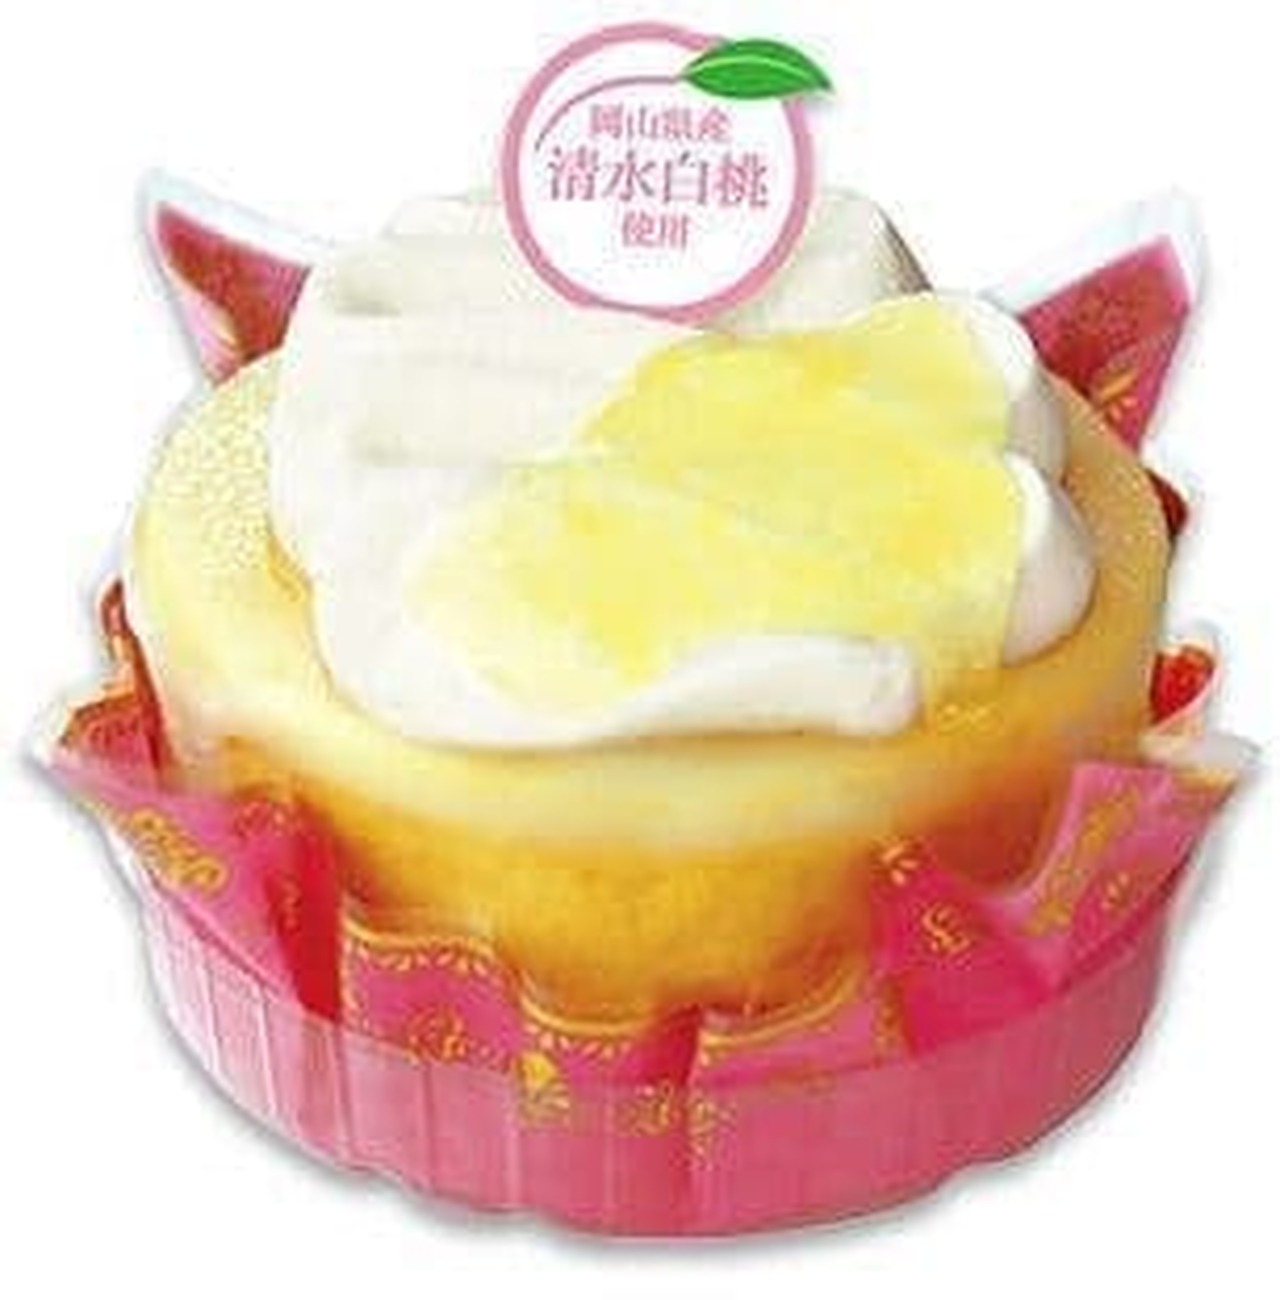 Fujiya pastry shop "Plenty of cream stump cake (Shimizu white peach from Okayama prefecture)"